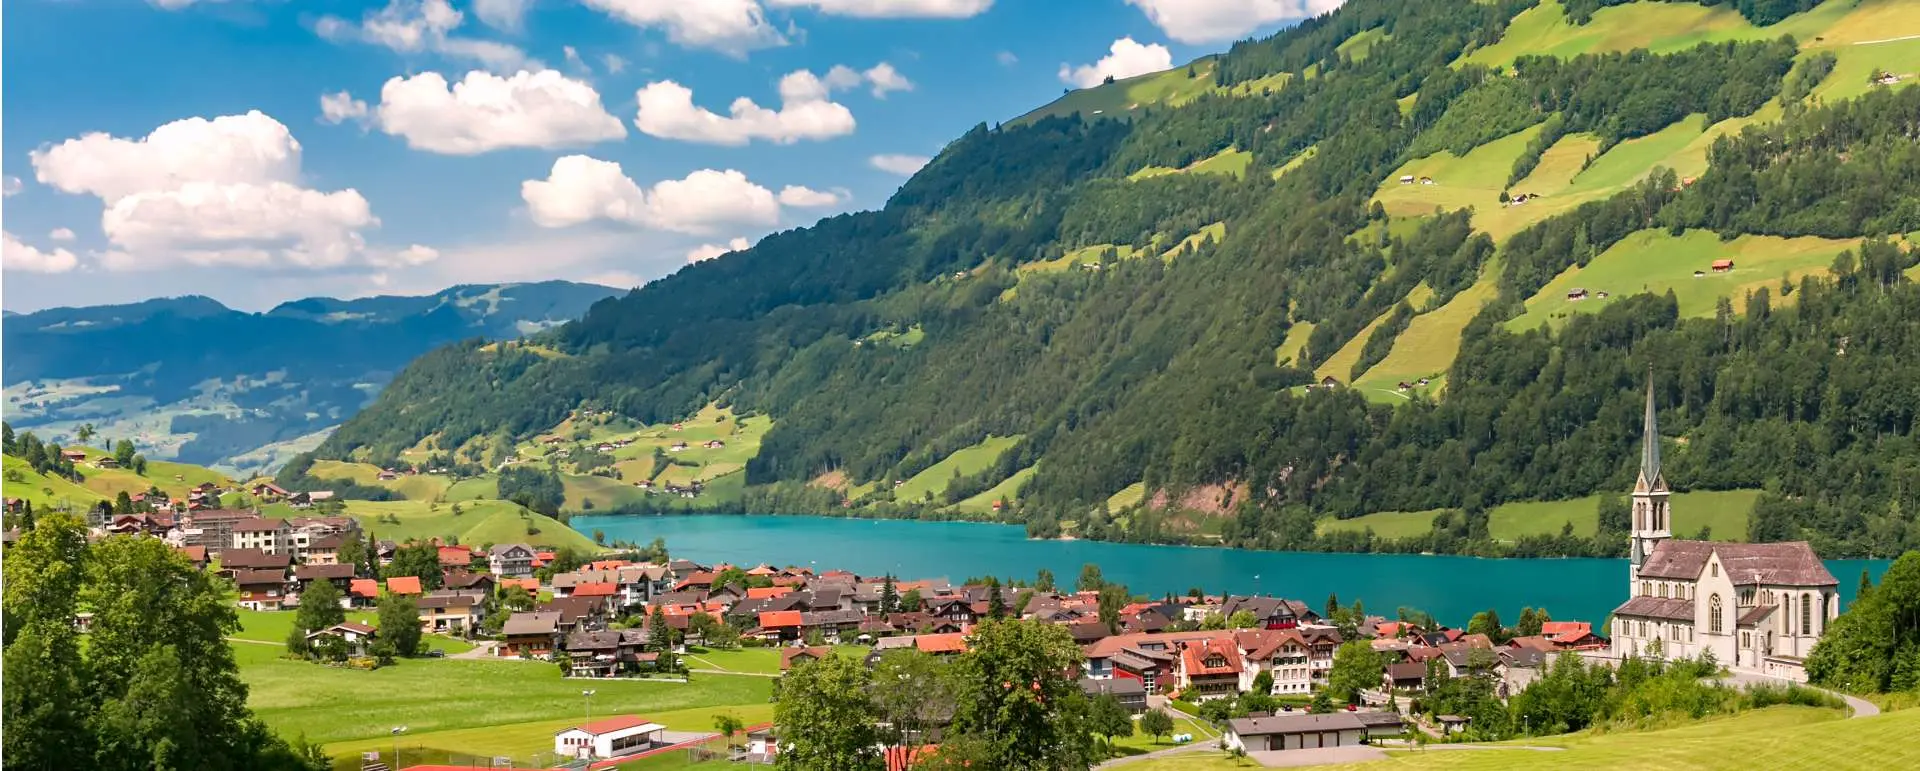 Obwalden - the destination for train travelers